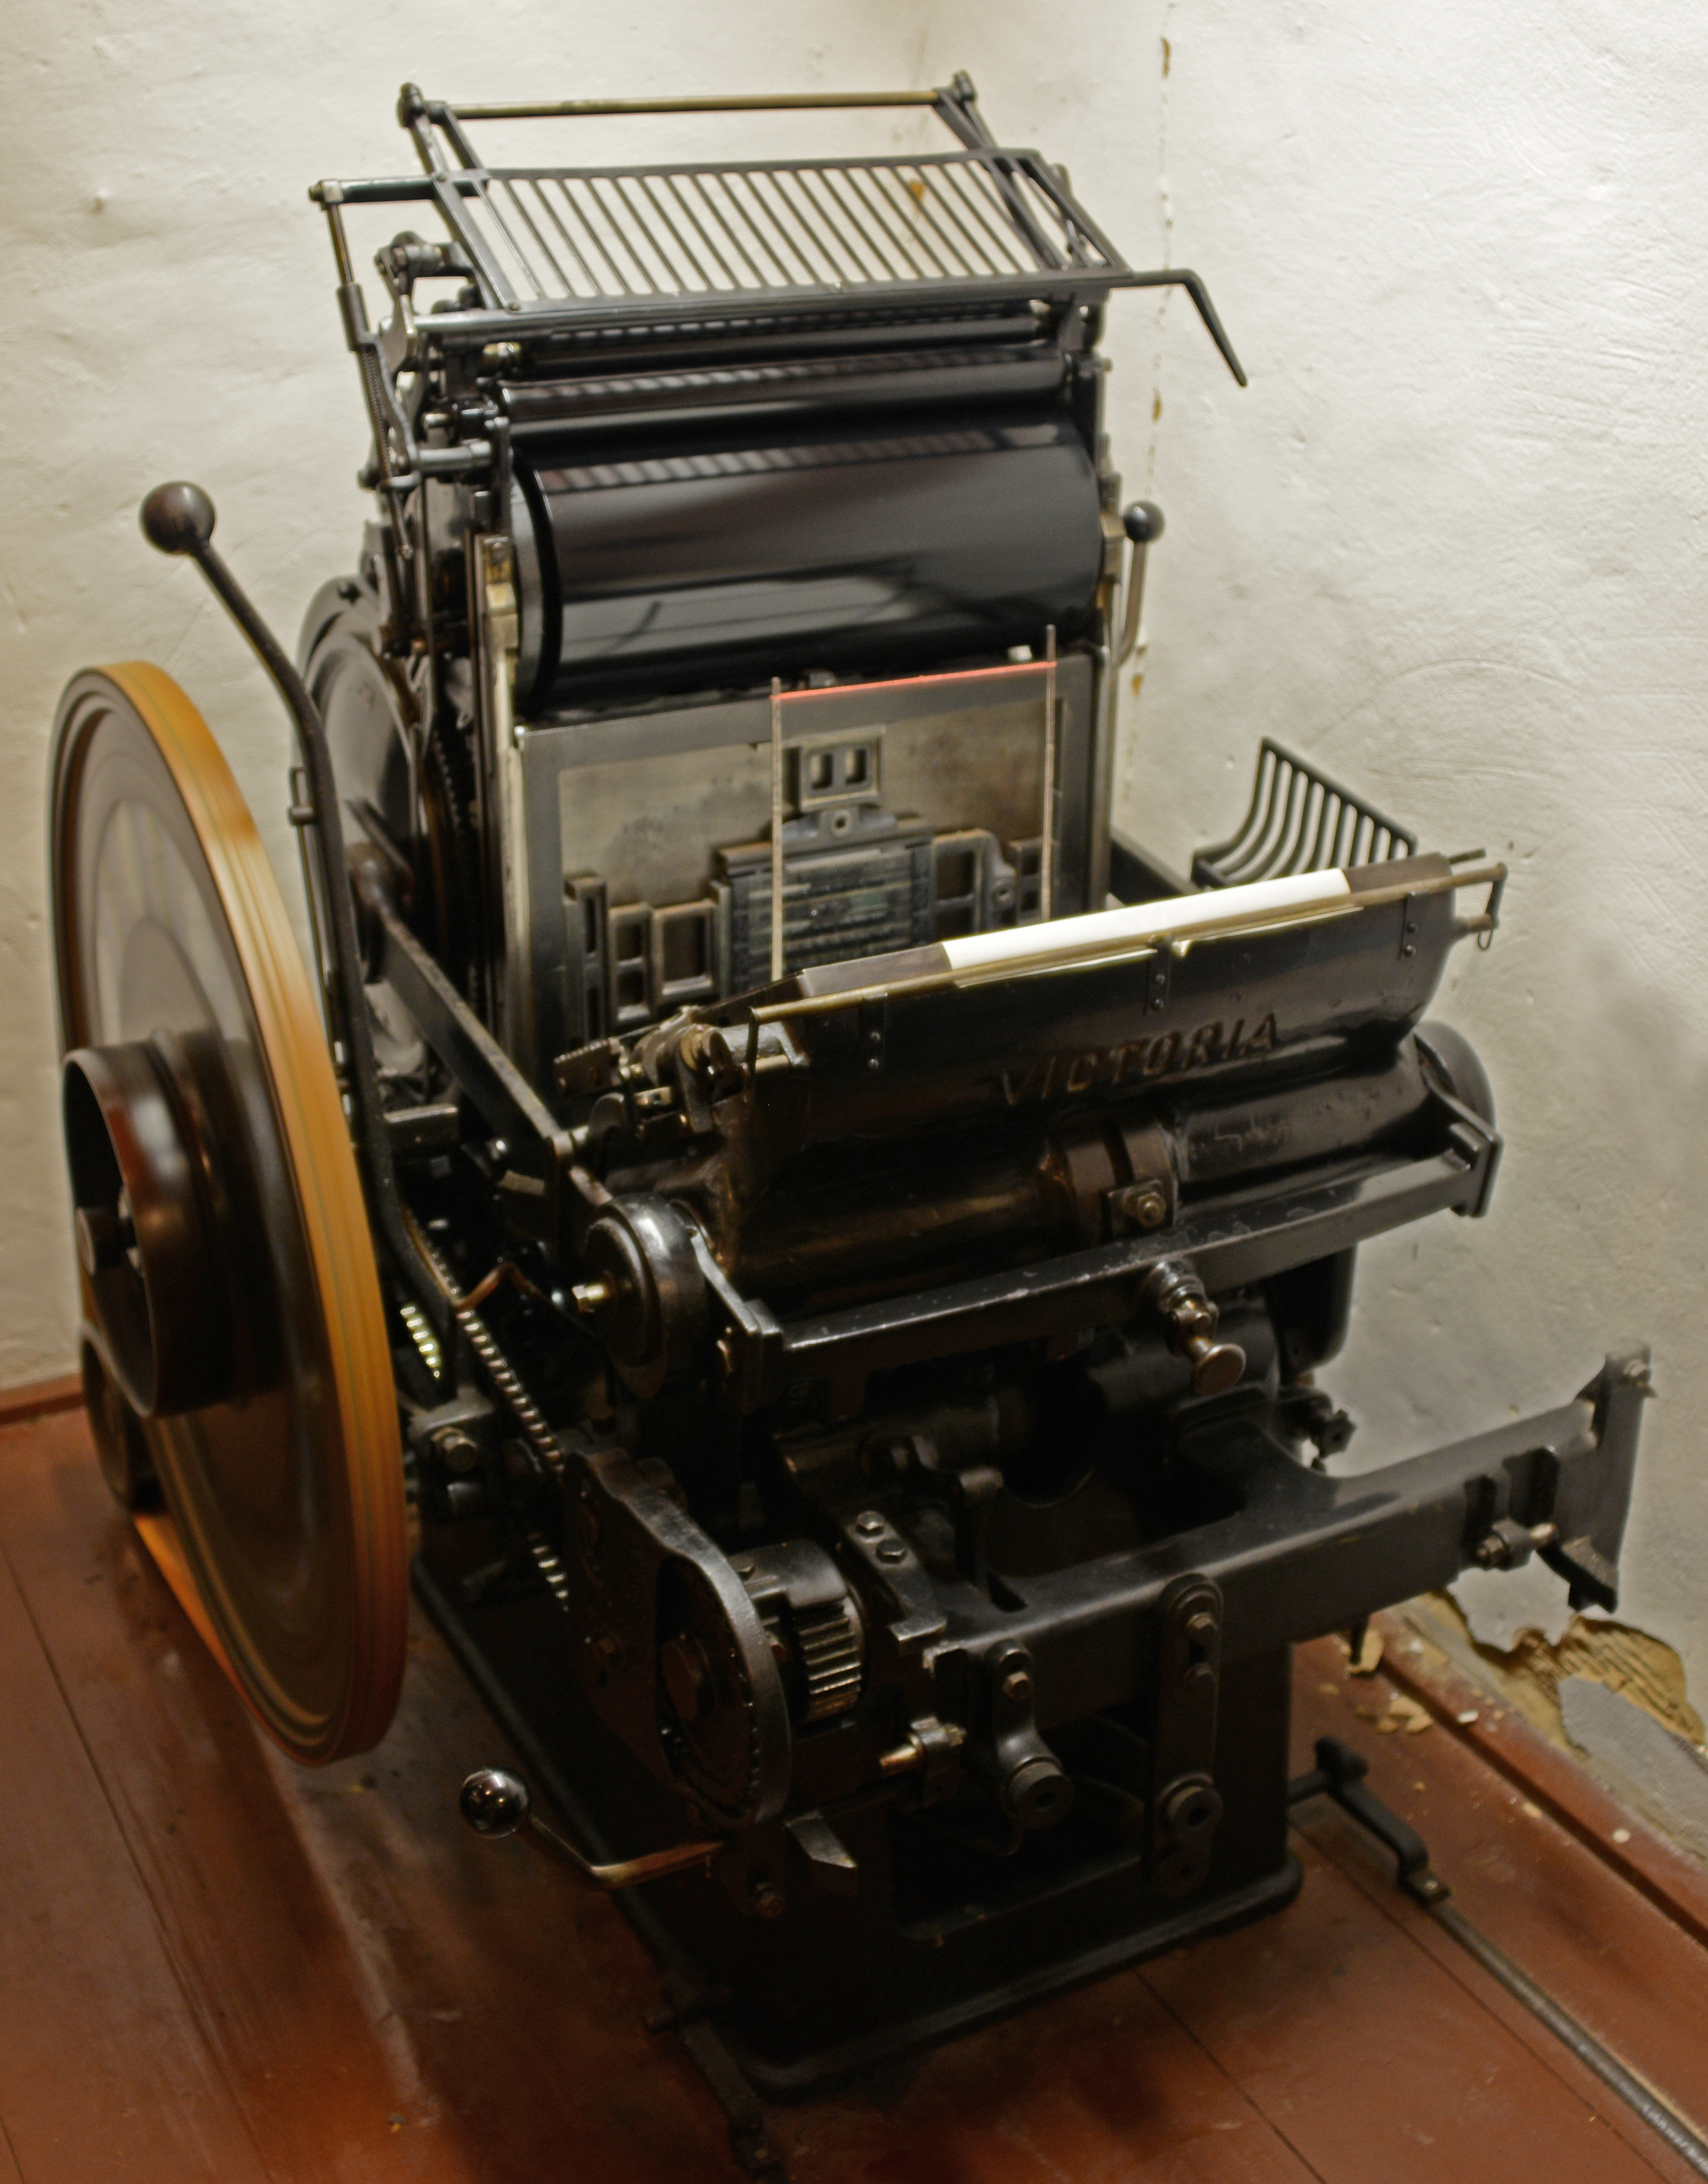 Machine press - Wikipedia